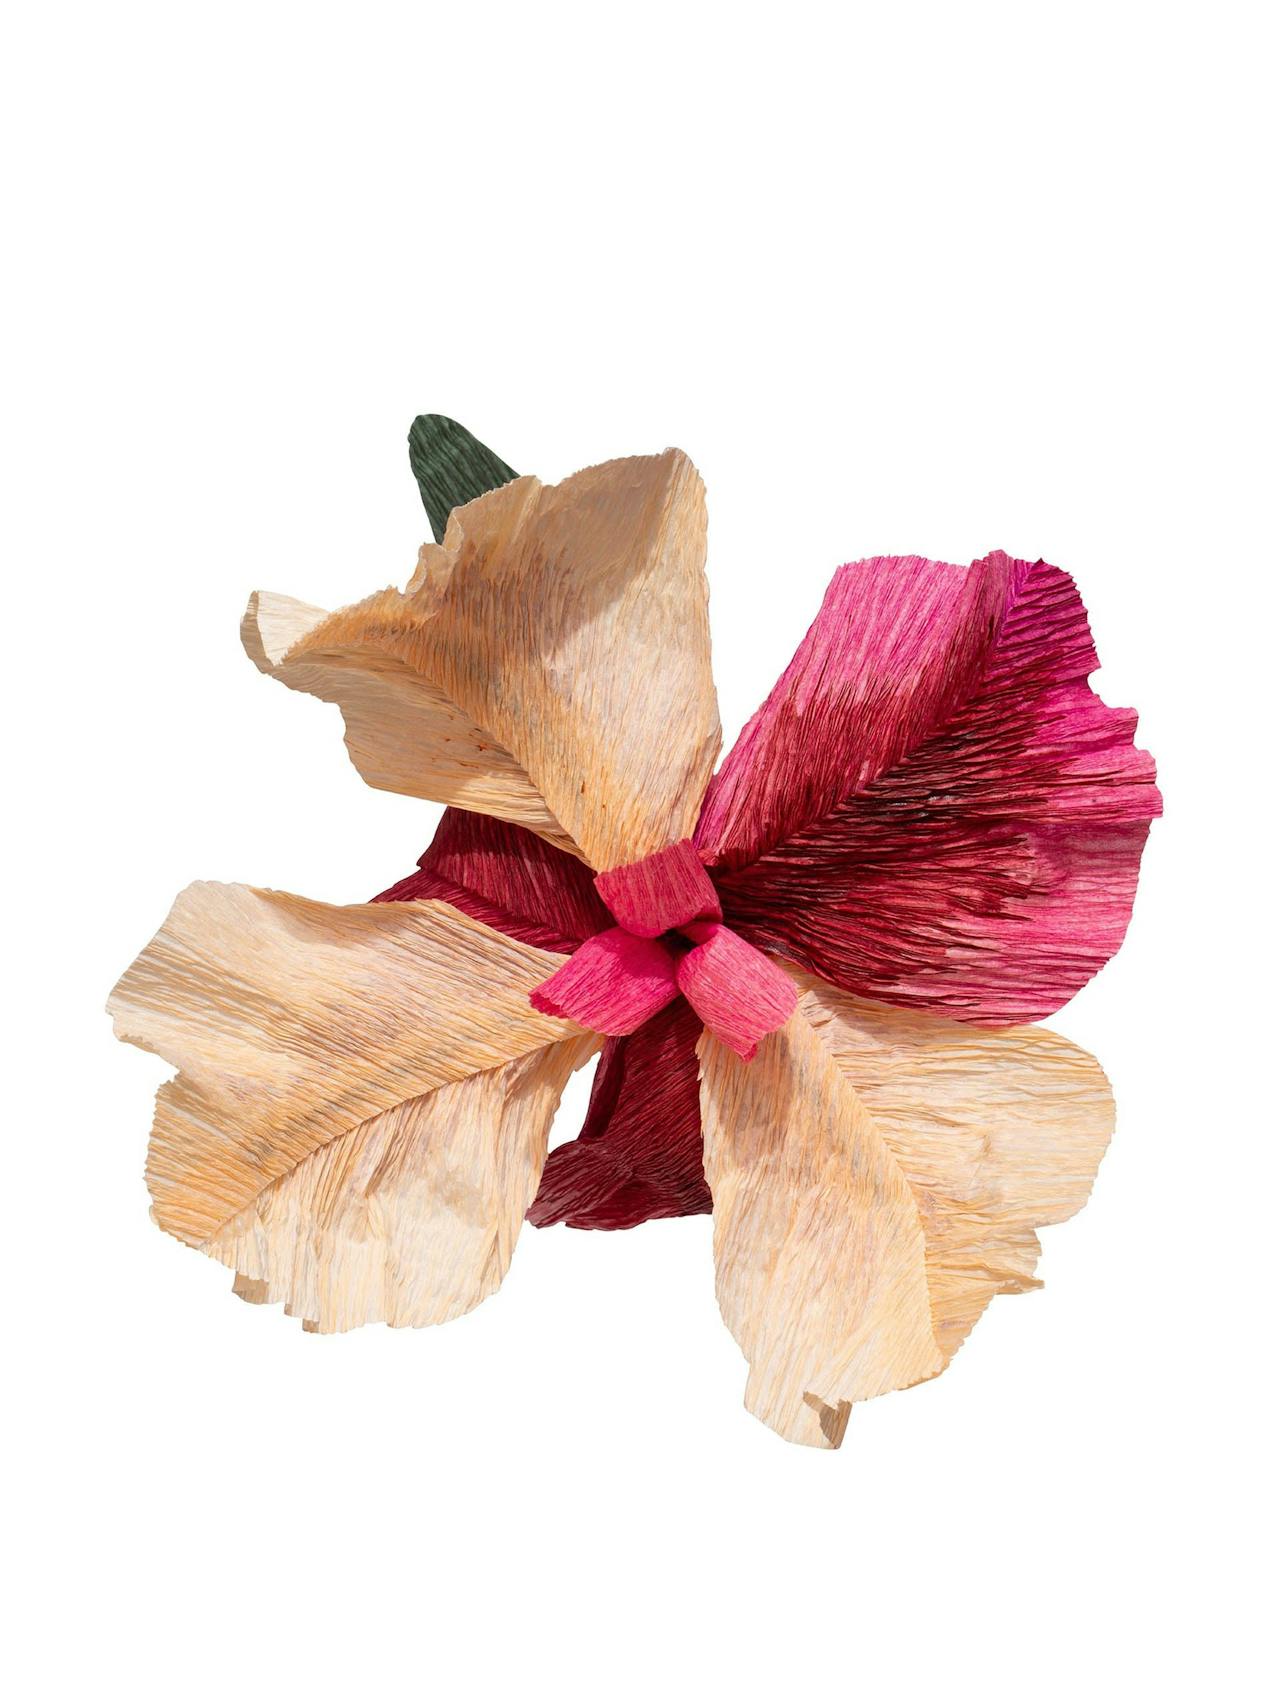 Iris Paper Flower